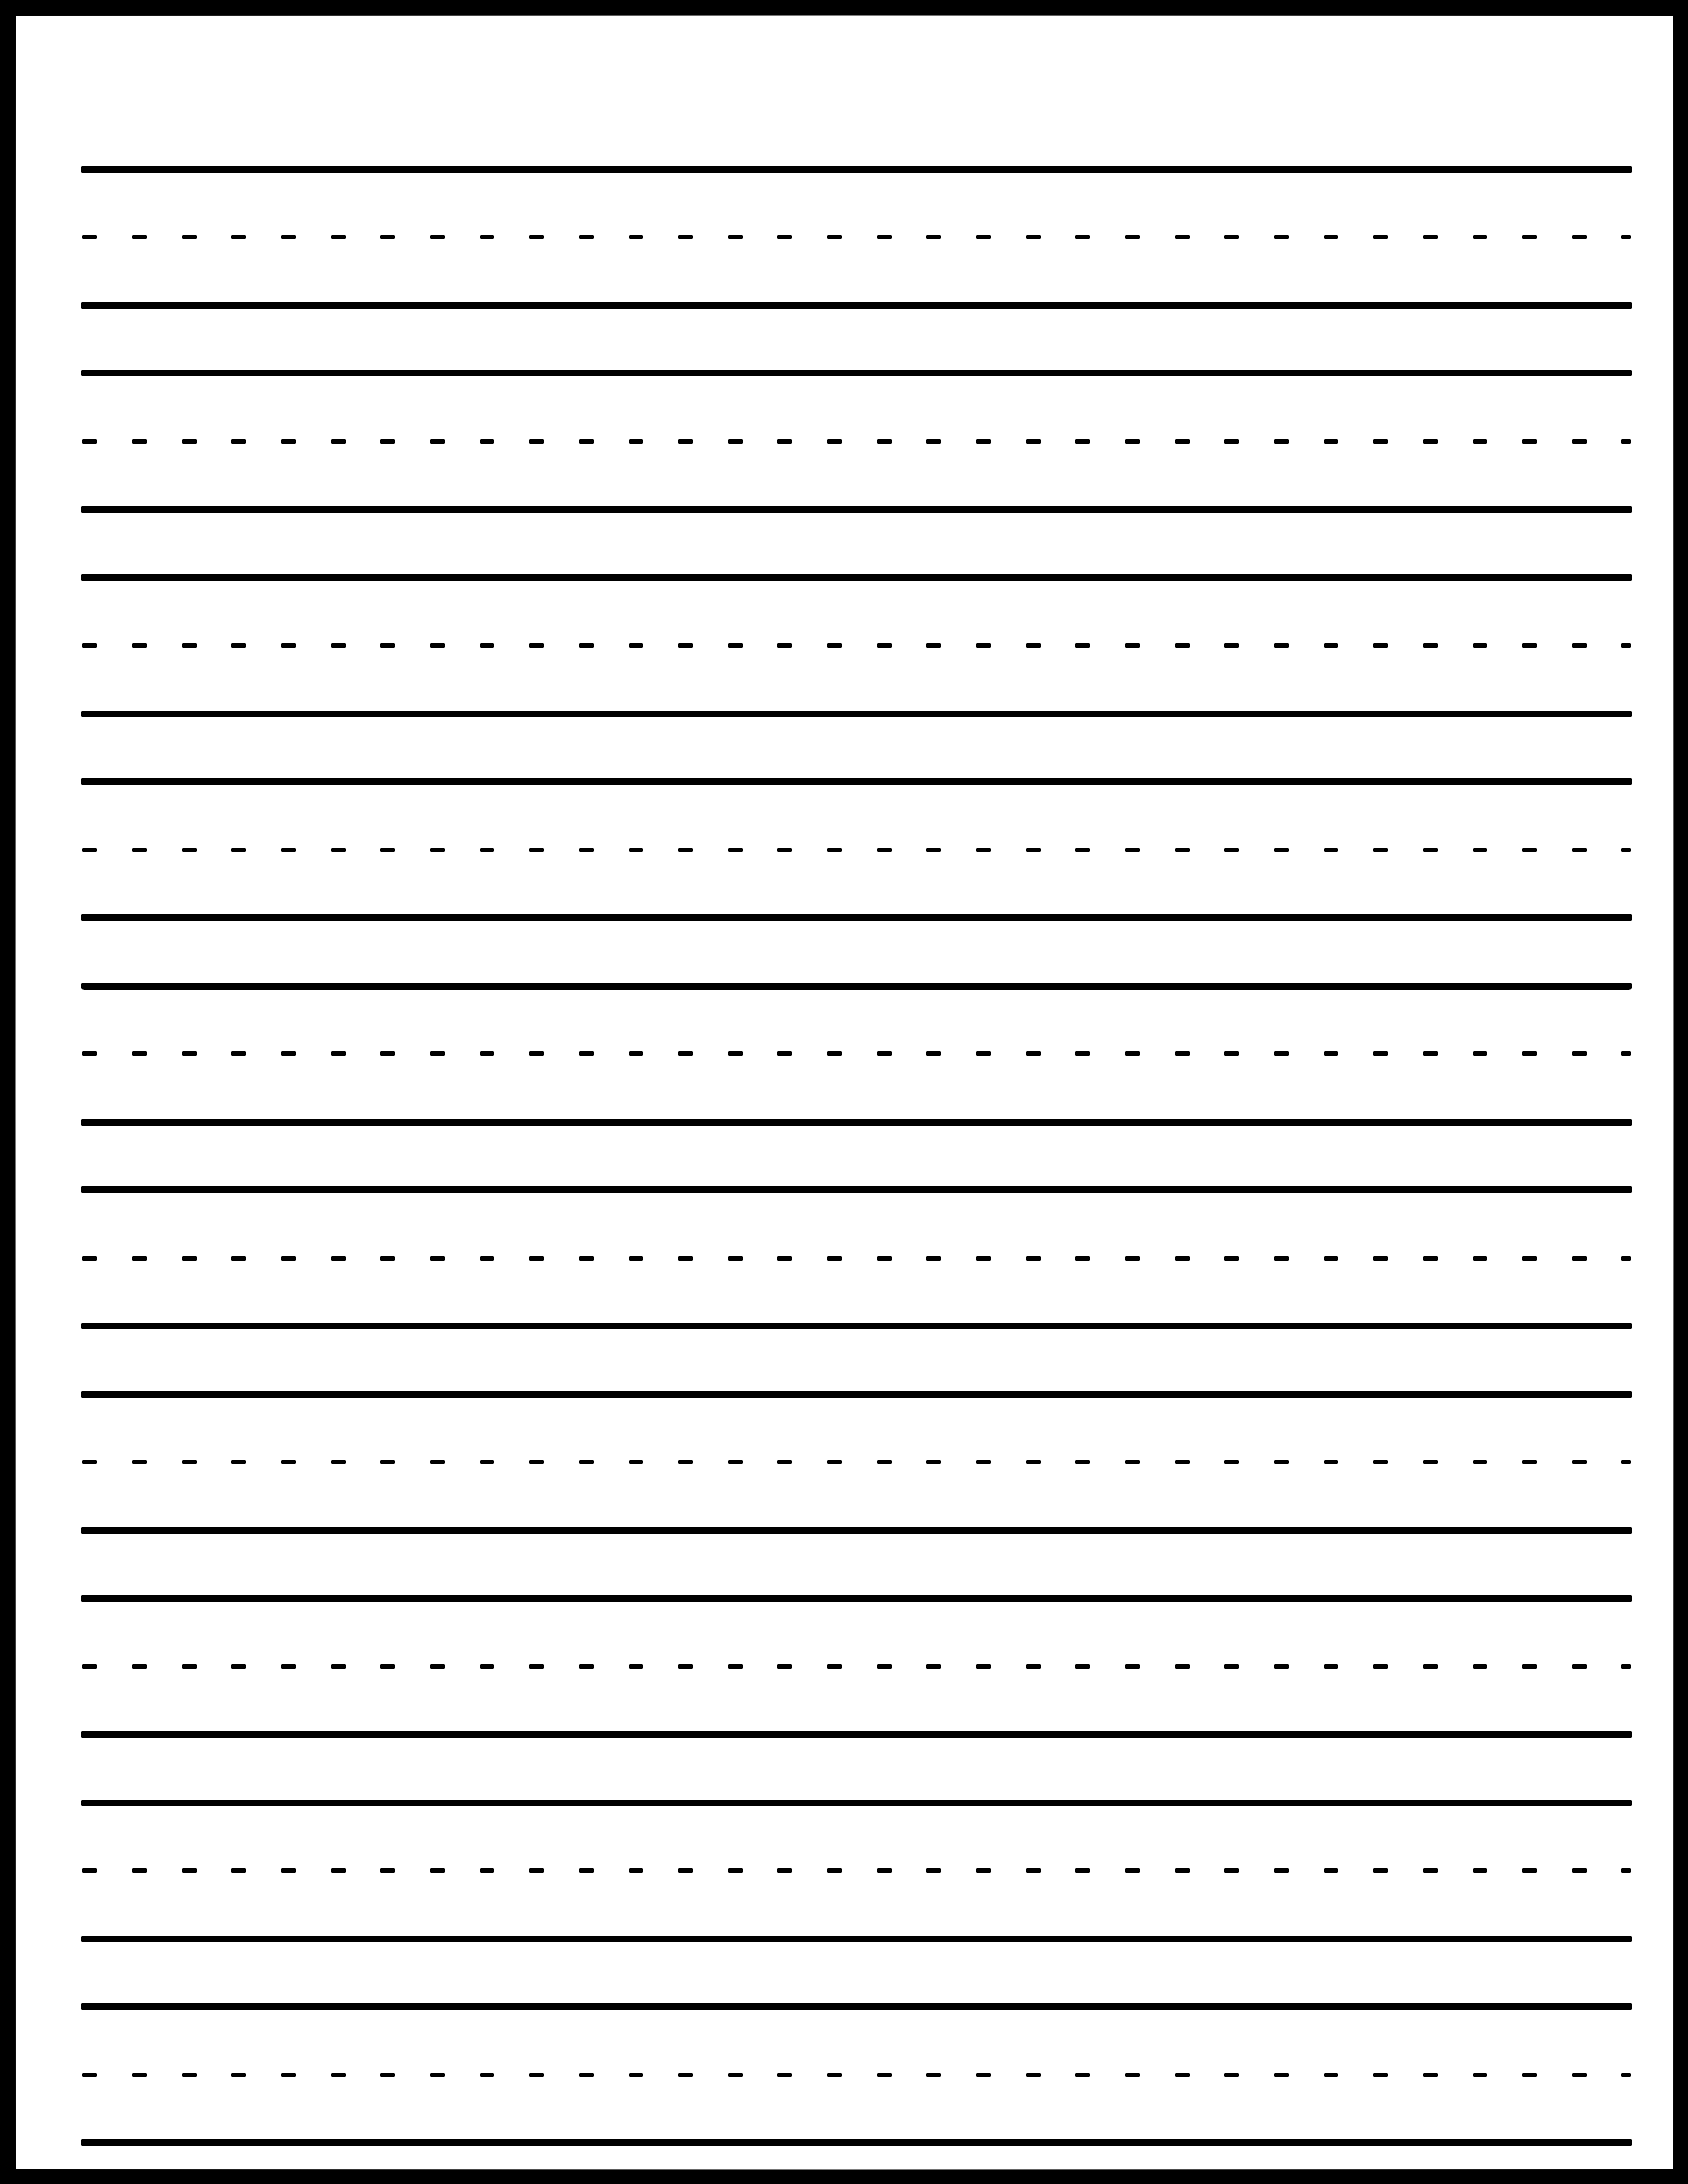 download-kindergarten-handwriting-practice-paper-with-dotted-lines-amazon-kdp-interior-www